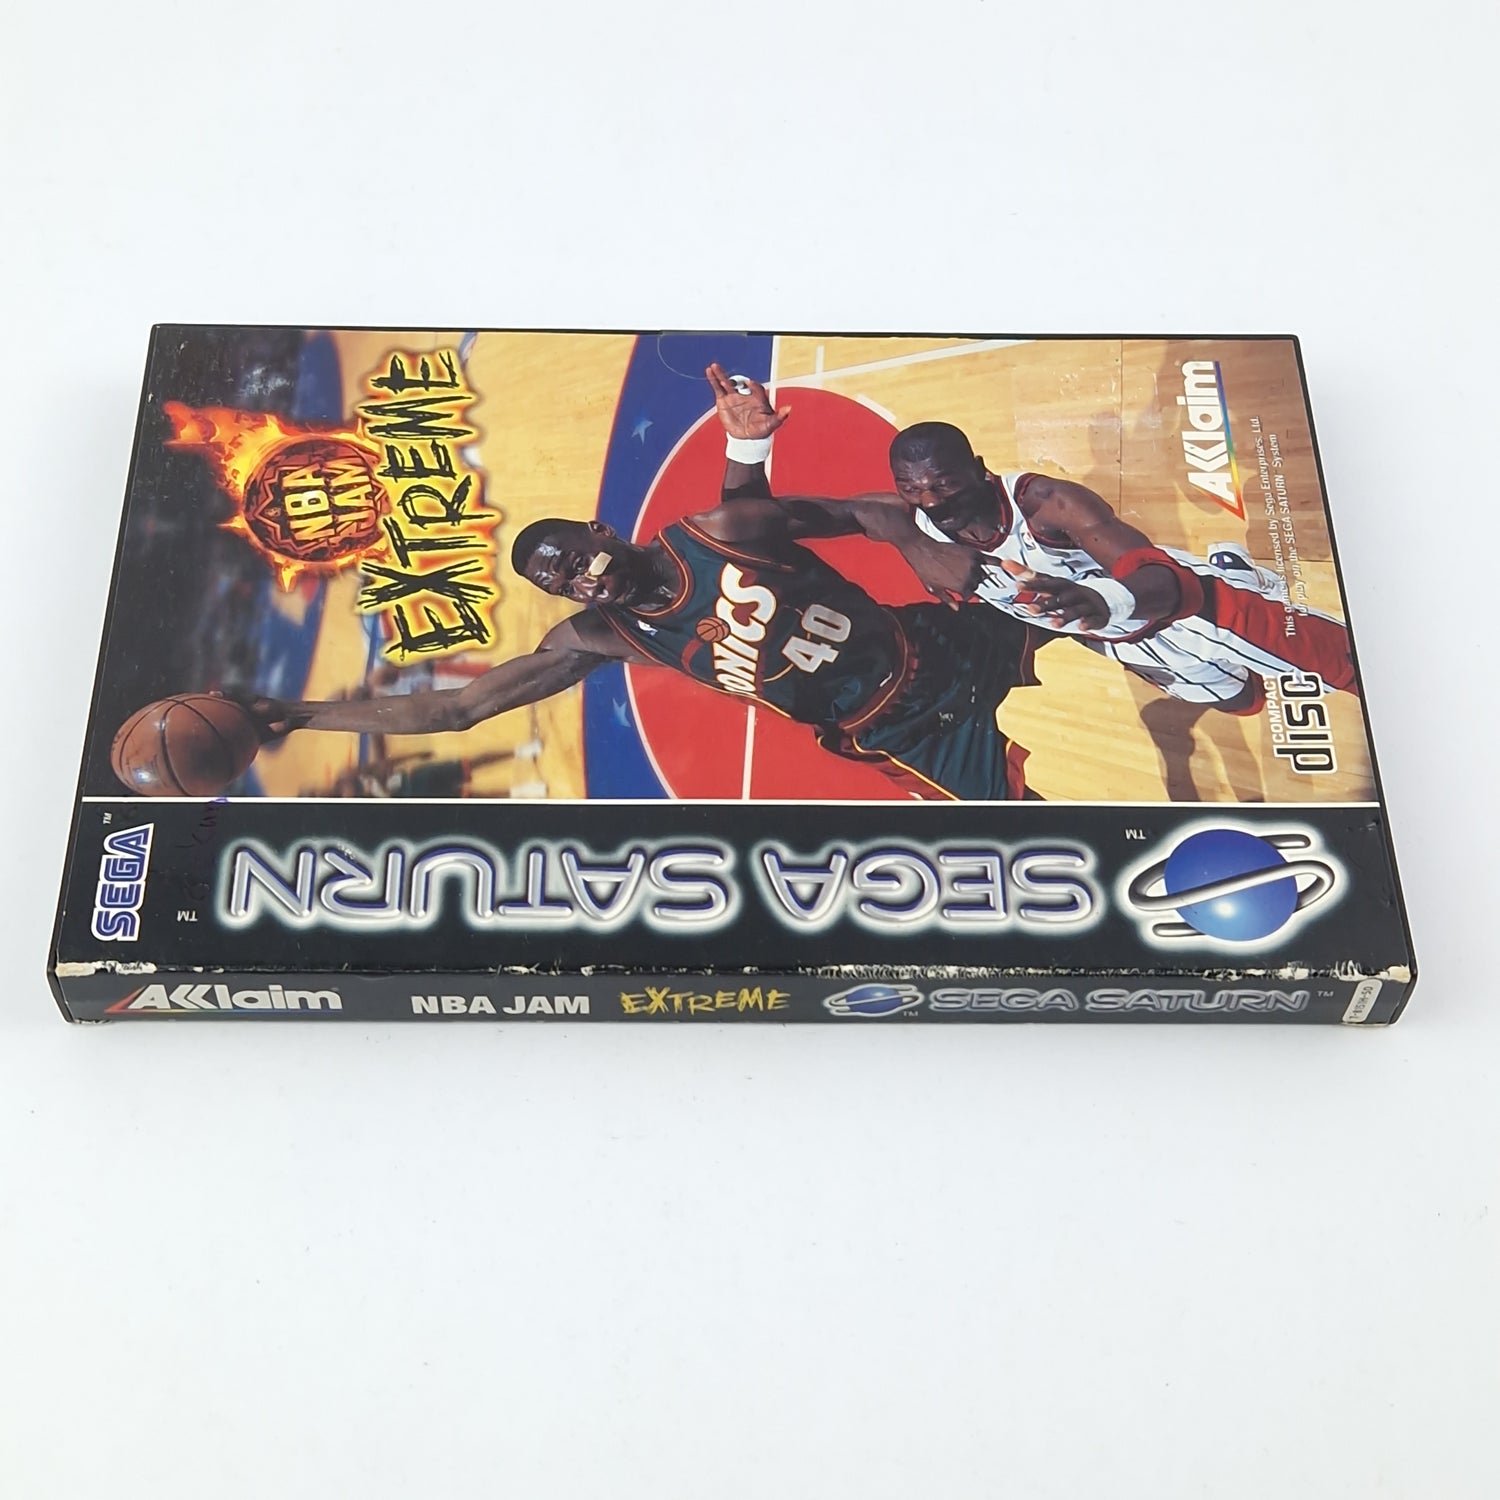 Sega Saturn Game: NBA Jam Extreme - CD Instructions OVP / PAL Disk Basketball